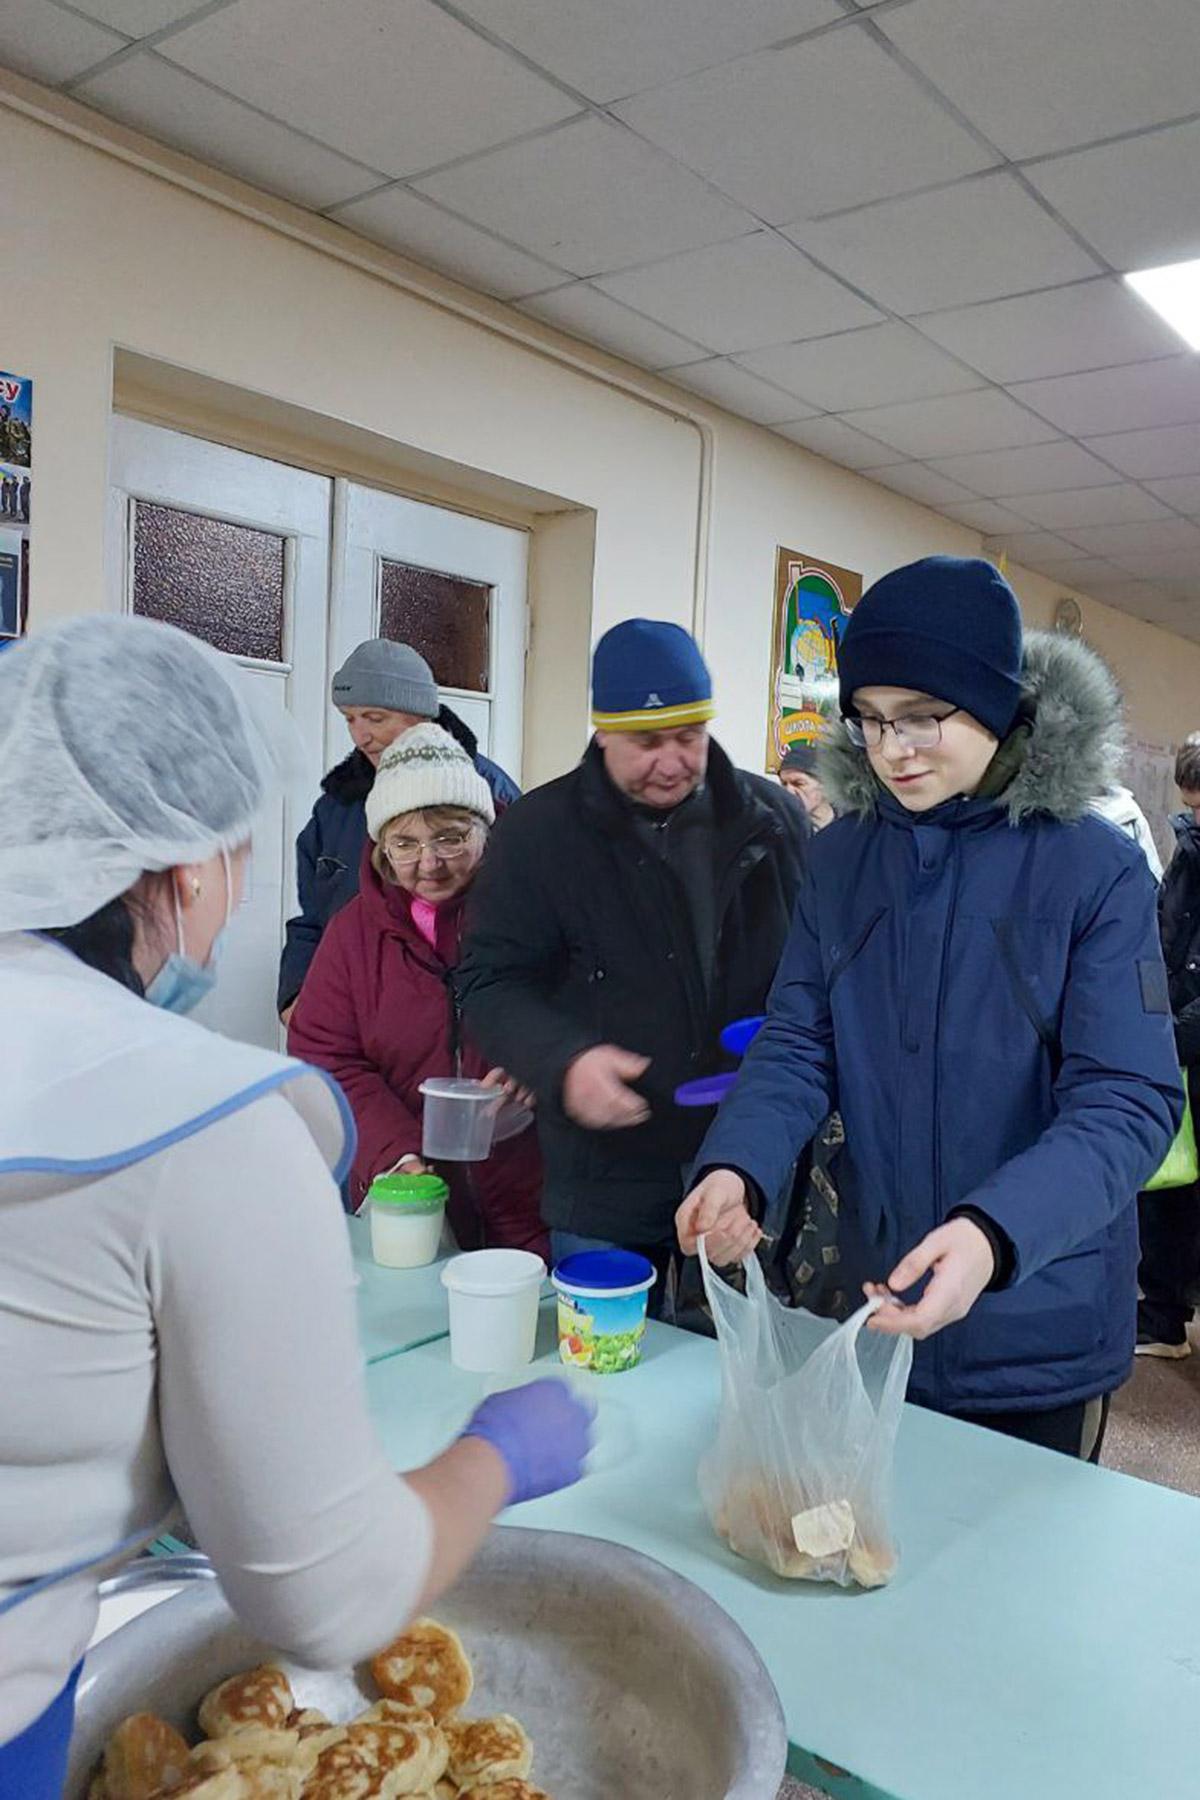 Menschen aus Charkiw bekommen in einem Wärmepunkt Lebensmittelhilfen. Foto: Ekocity/Jugendrat Charkiw